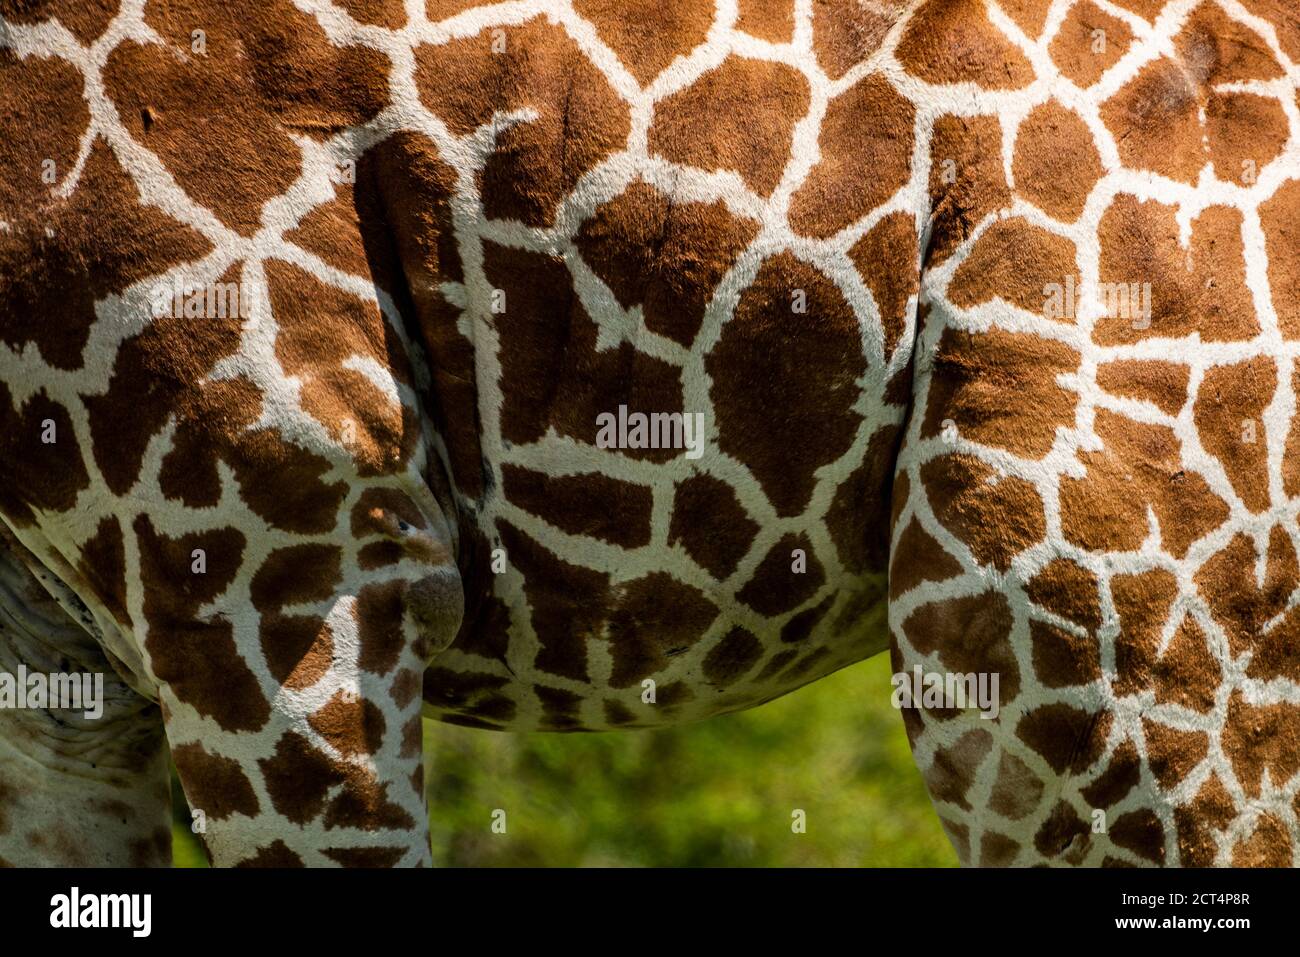 Giraffe réticulée (Giraffa reticulata) au ranch El Karama, comté de Laikipia, Kenya Banque D'Images